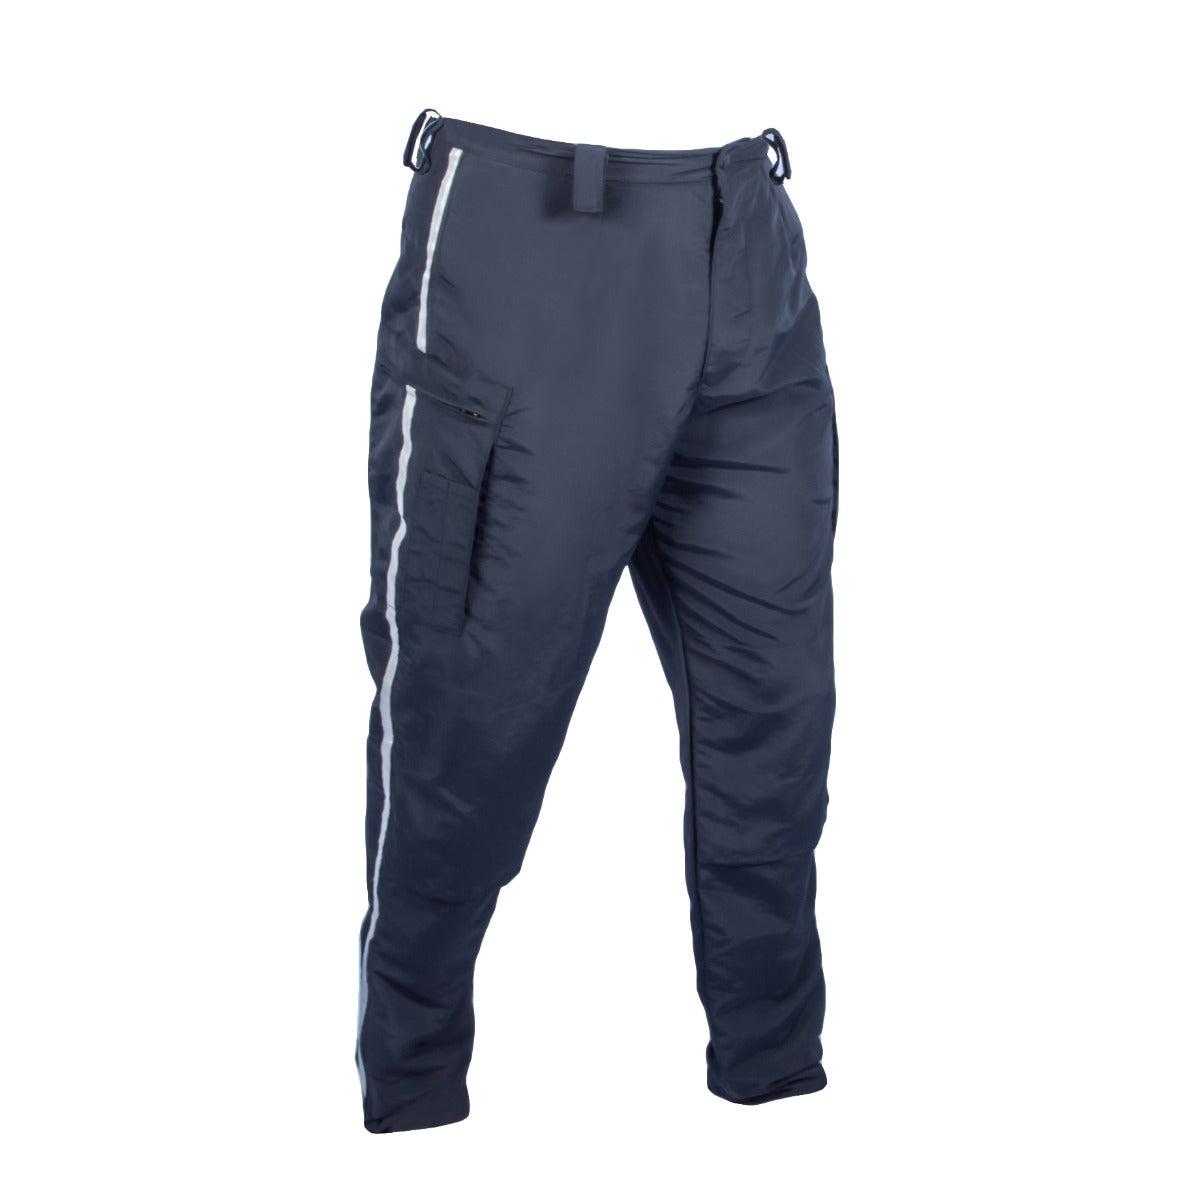 BUYISI Hi Vis Trousers High Visibility Bottoms Workwear reflective Tape  Safety Pants Orange XL - Walmart.com